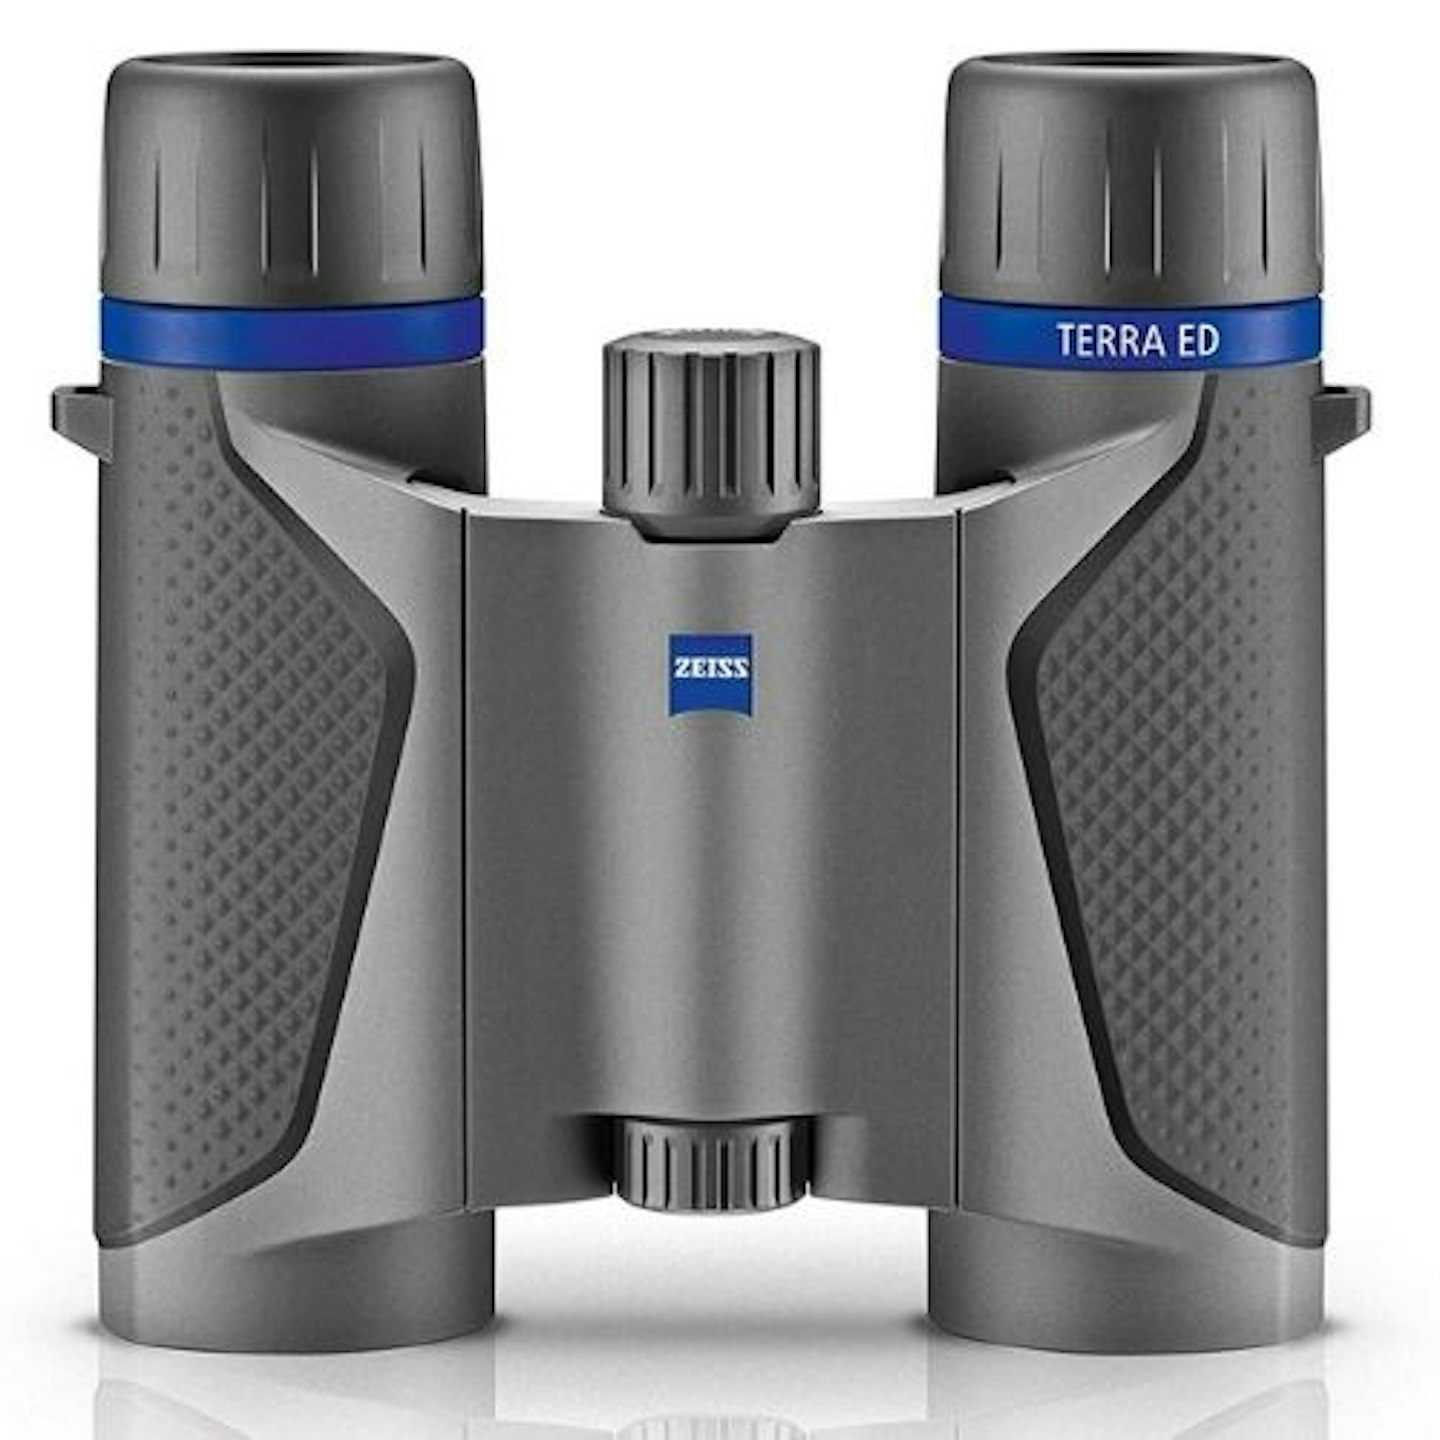 Zeiss Terra ED Compact Pocket Binocular 8 x 25 cm